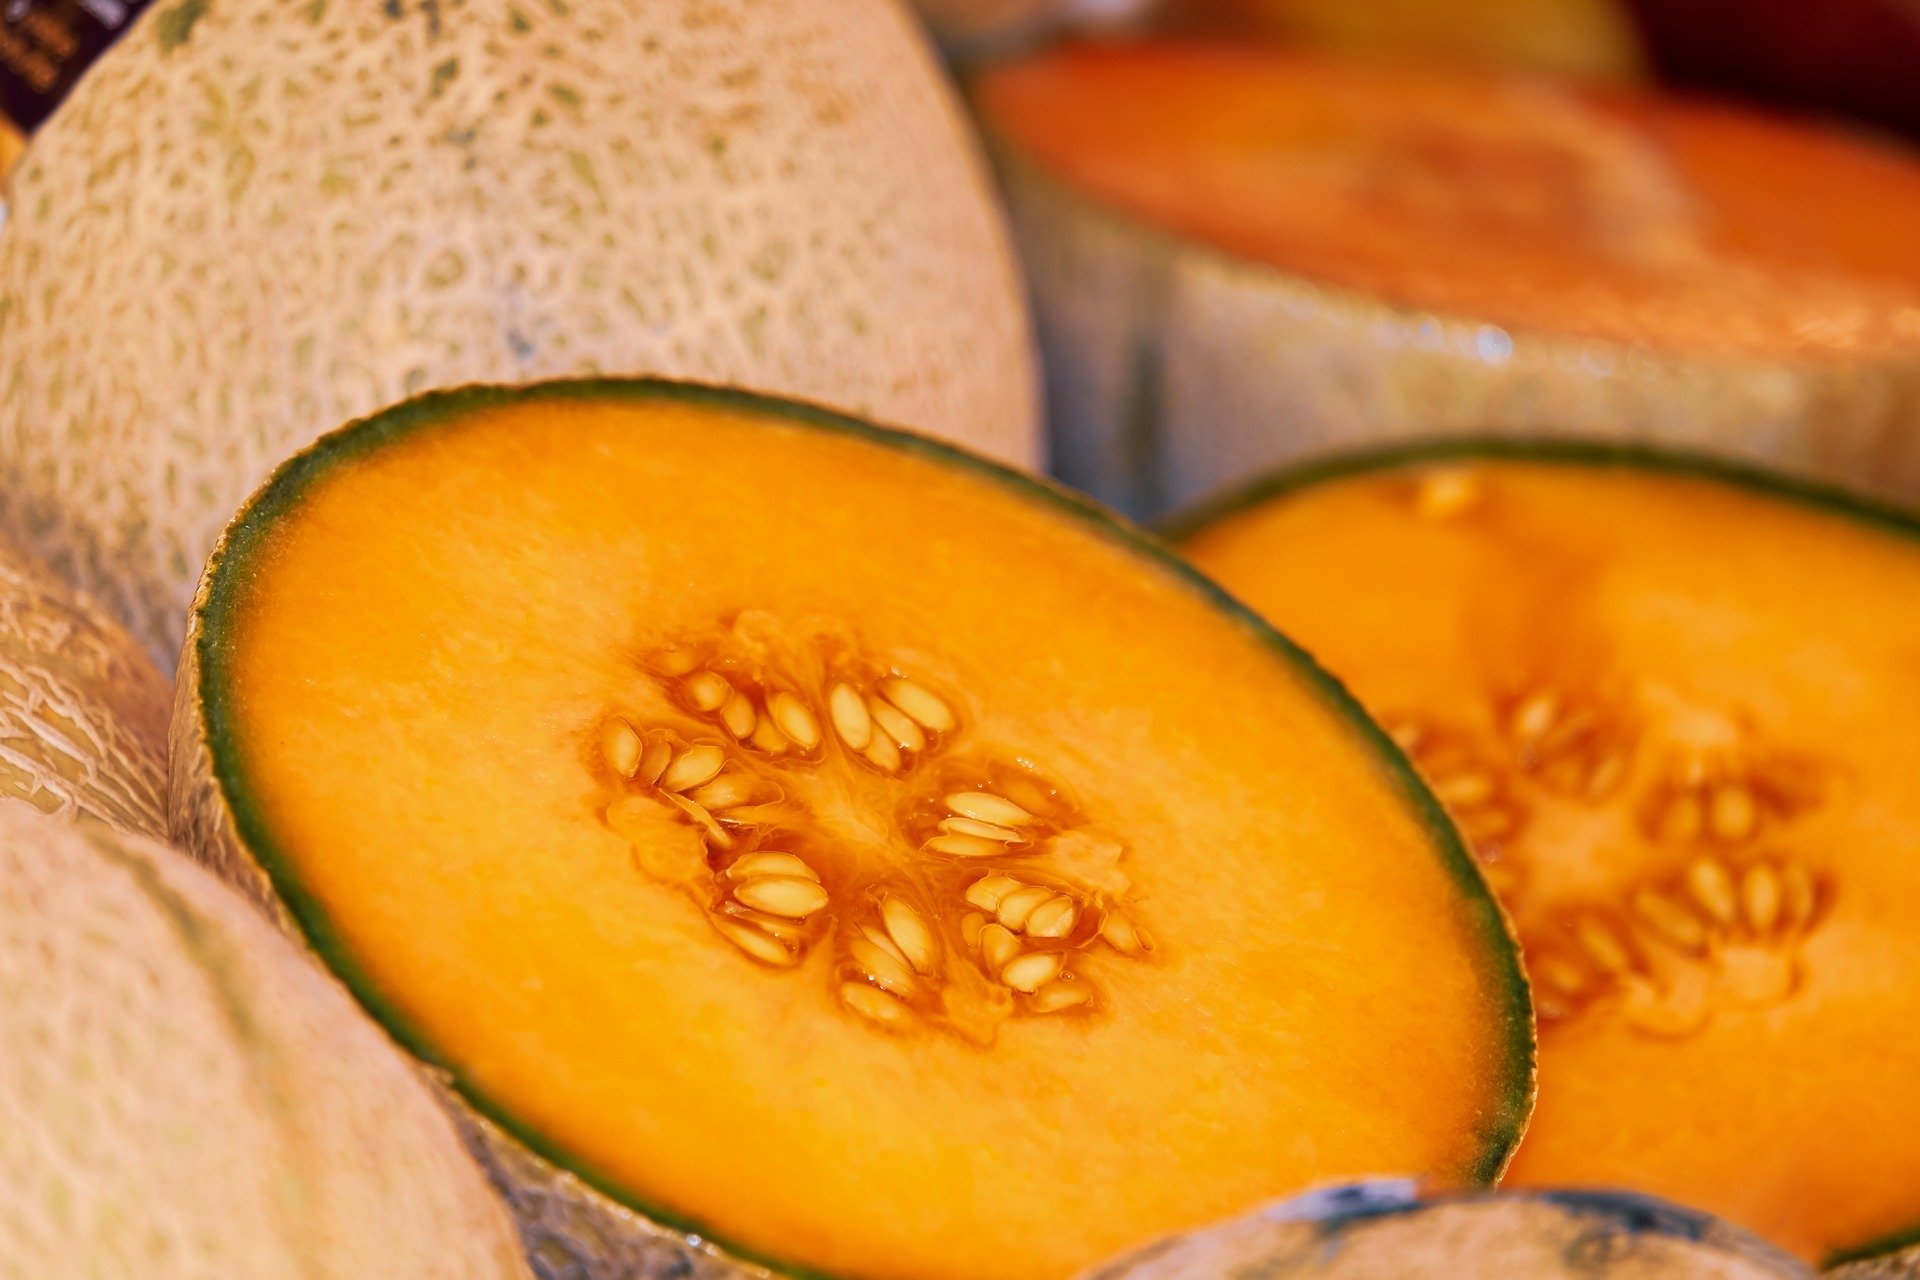 Servicio Fitosanitario investigará cuál empresa produjo el melón con residuos de agroquímico que causó alerta en Europa